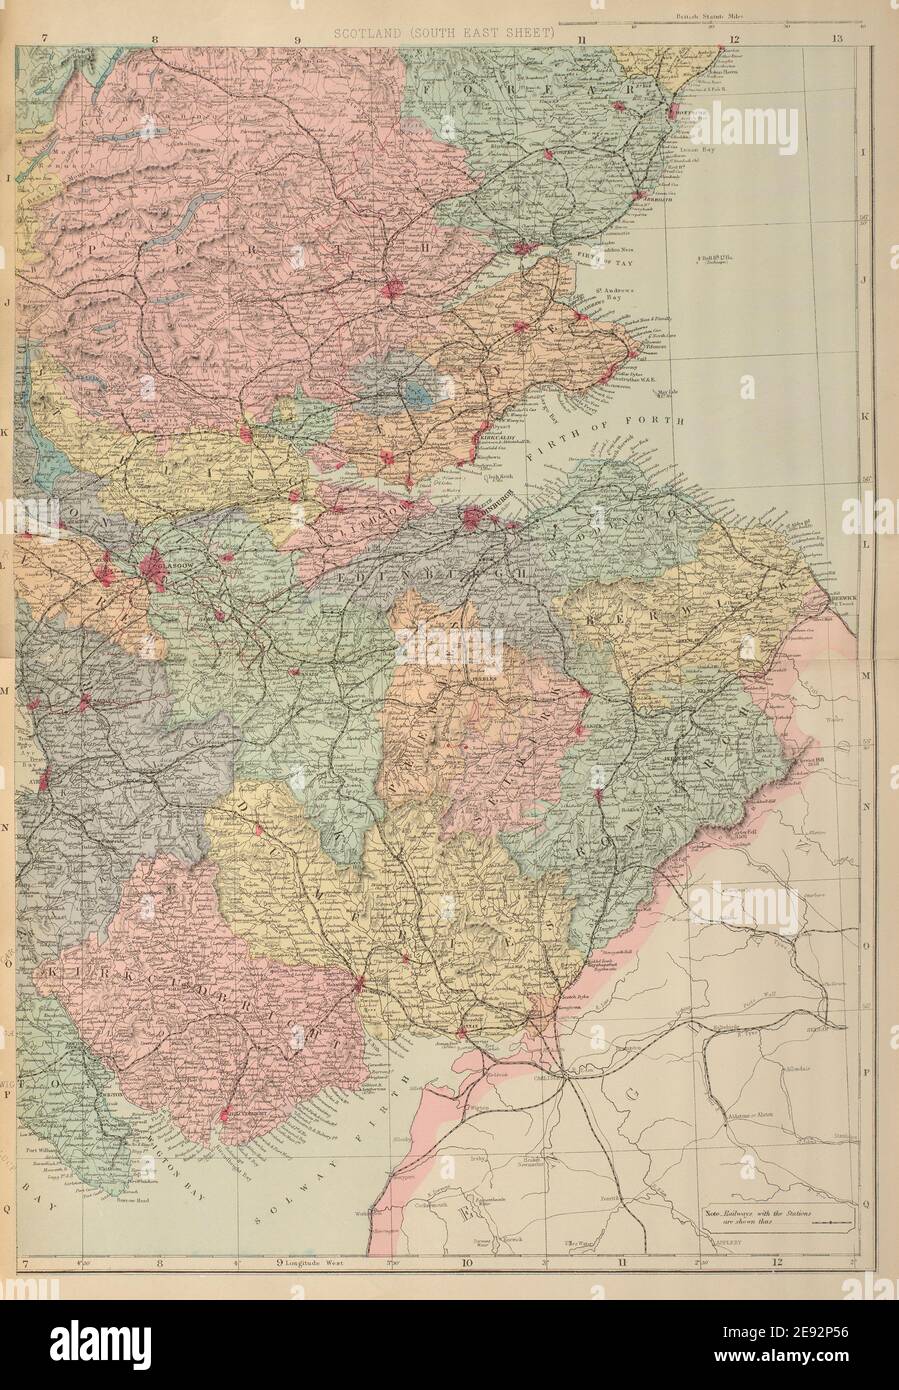 SCOTLAND (South East) Edinburgh Glasgow Perth Fife GW BACON 1885 old map Stock Photo